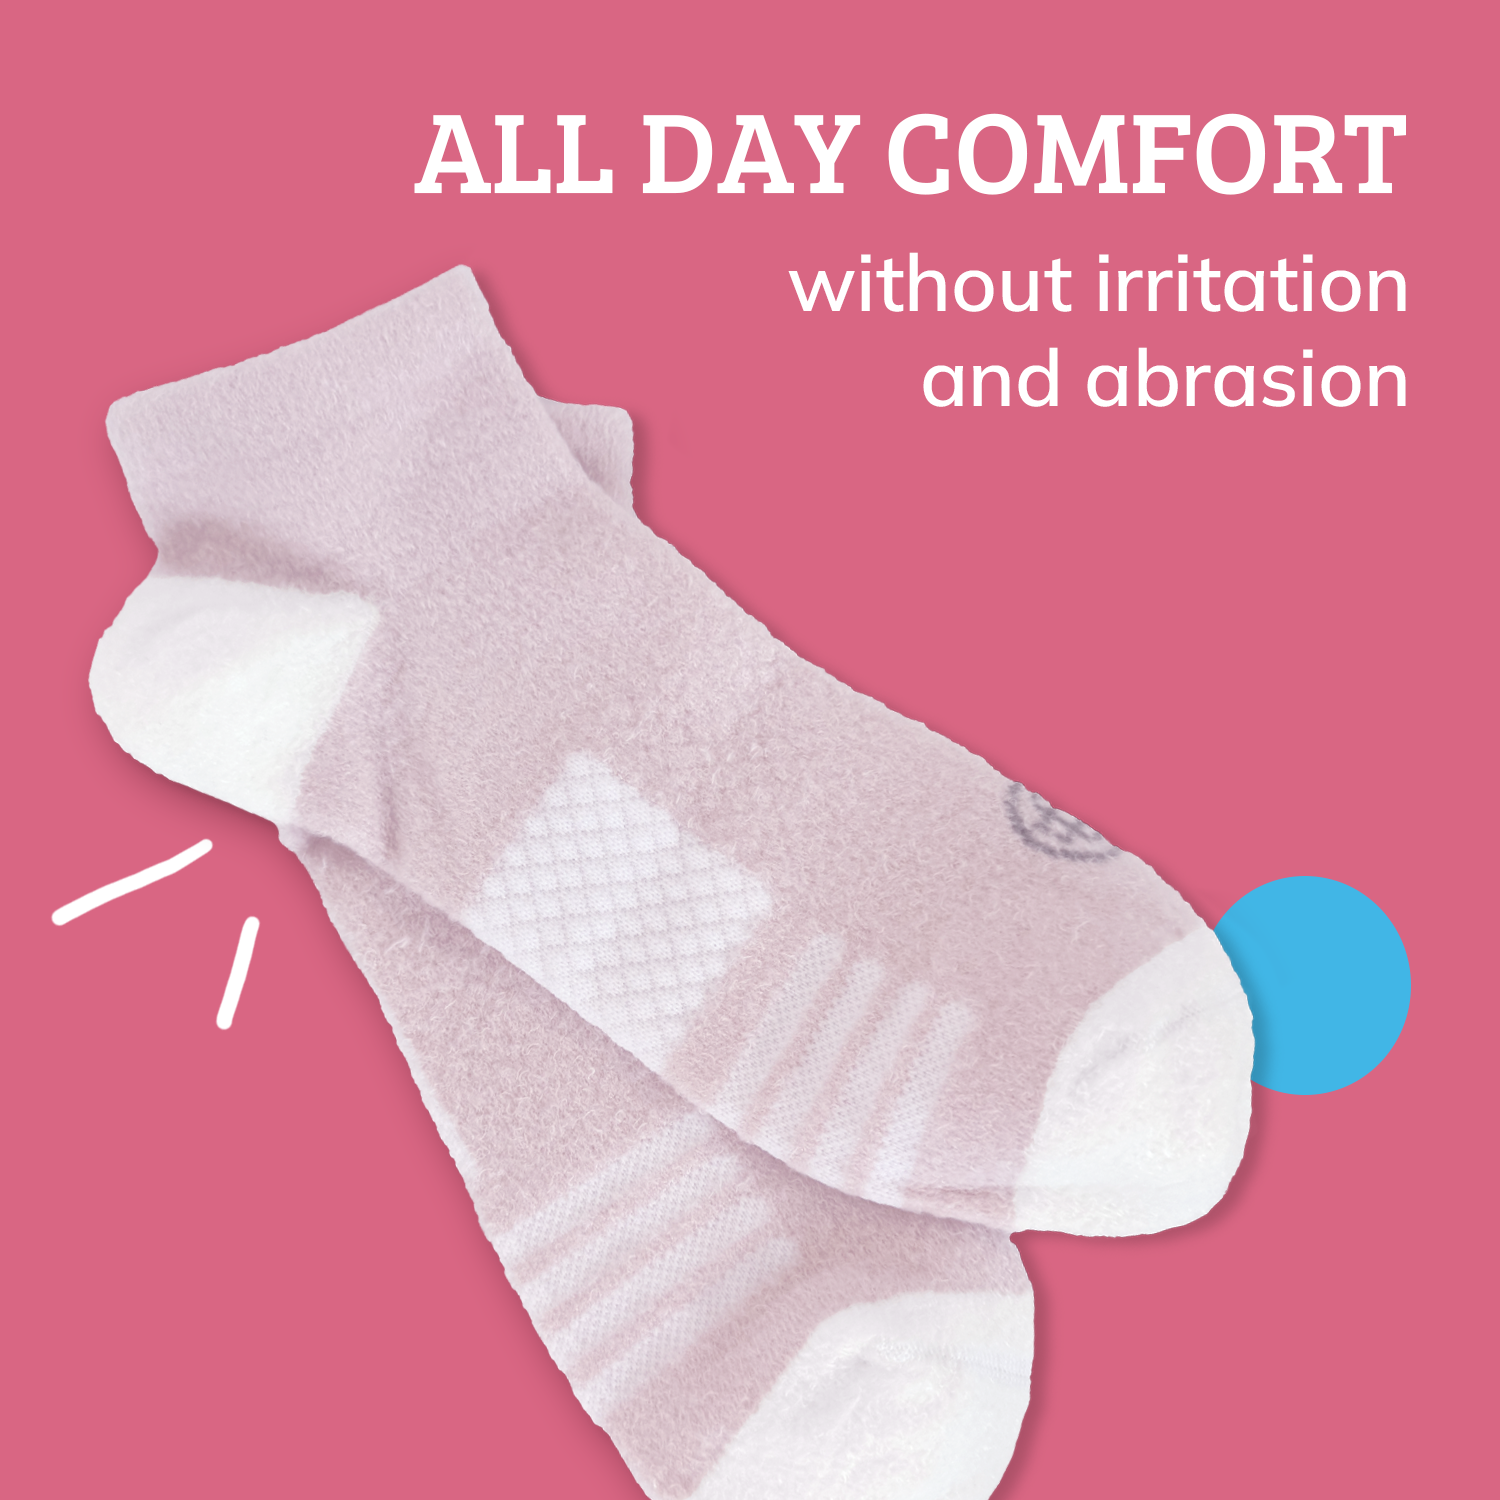 Cozy Compression Low Cut Ankle Socks